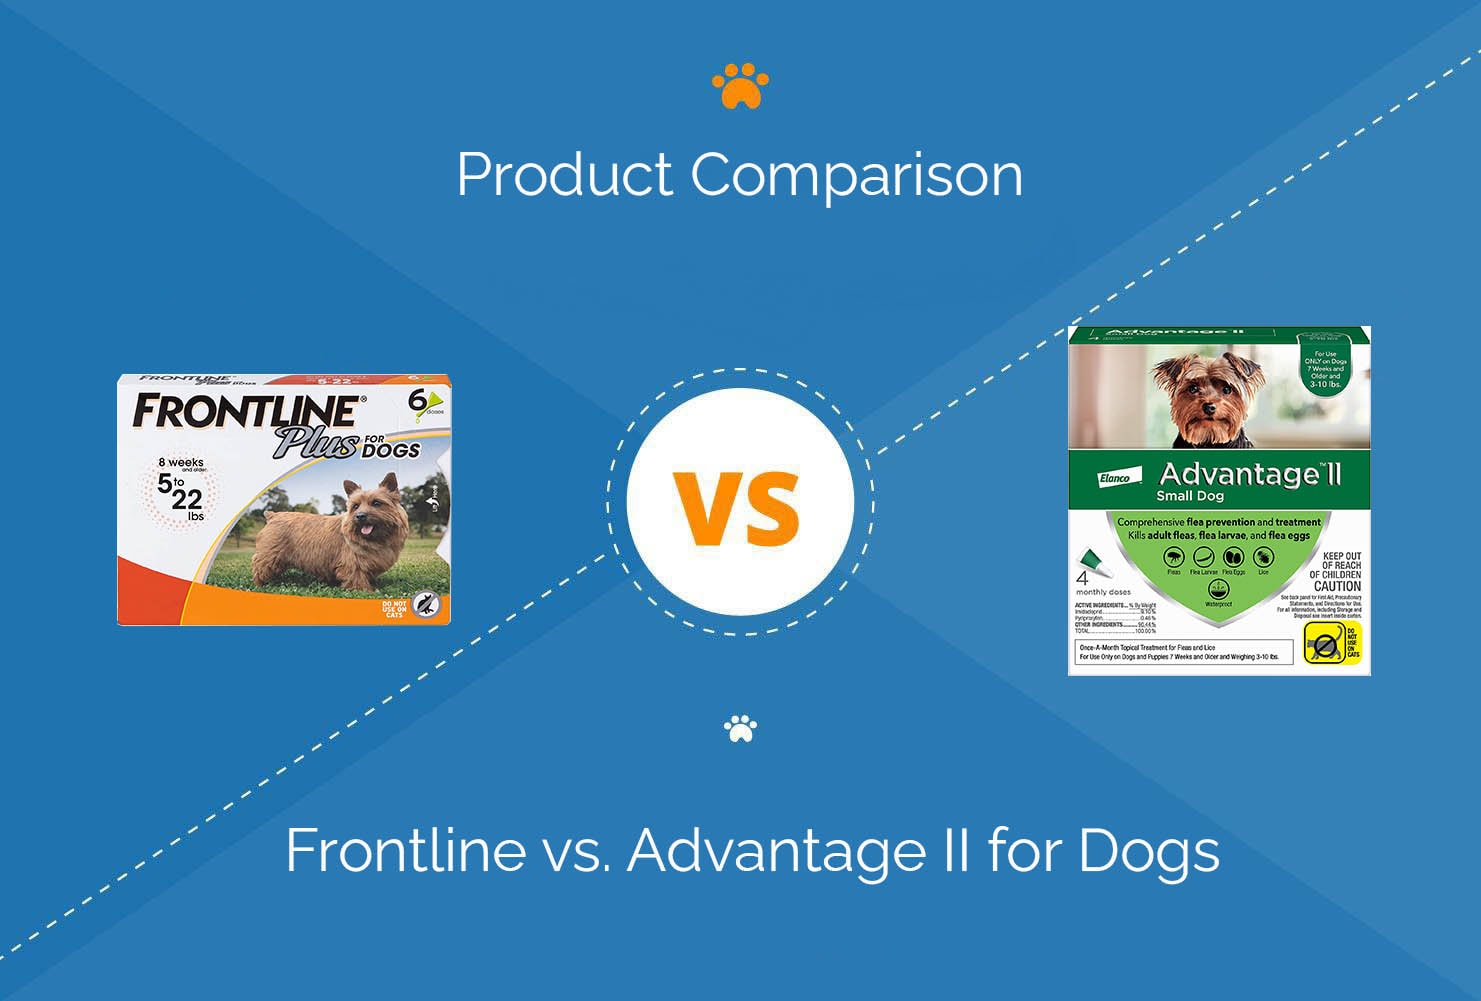 Frontline vs. Advantage II for Dogs